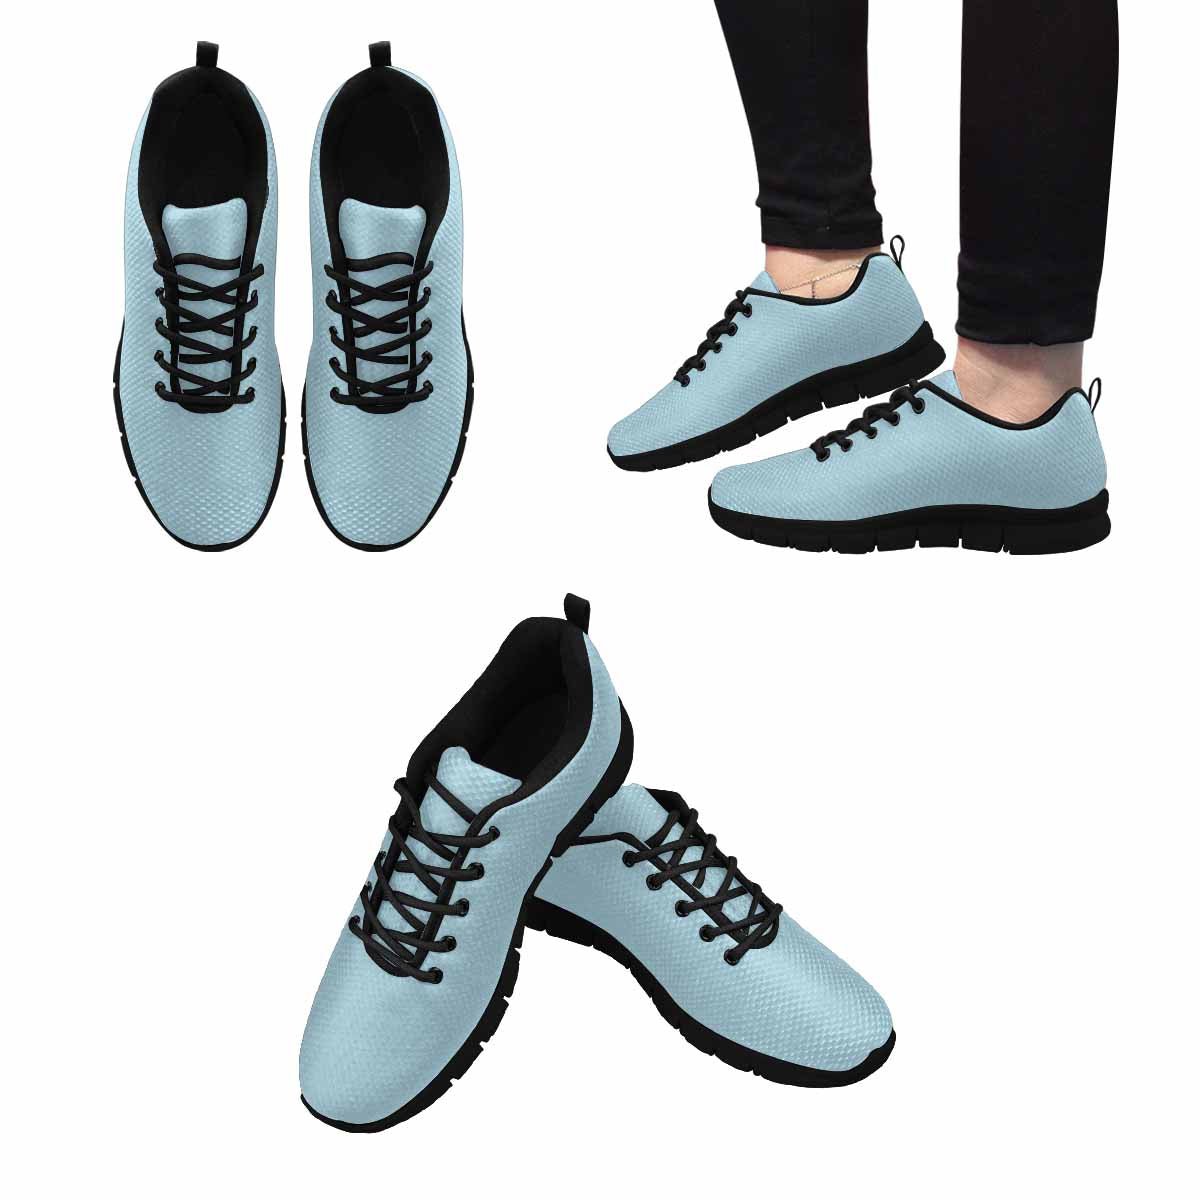 Uniquely You Sneakers for Men, Light Blue Running Shoes - KRE Prime Deals